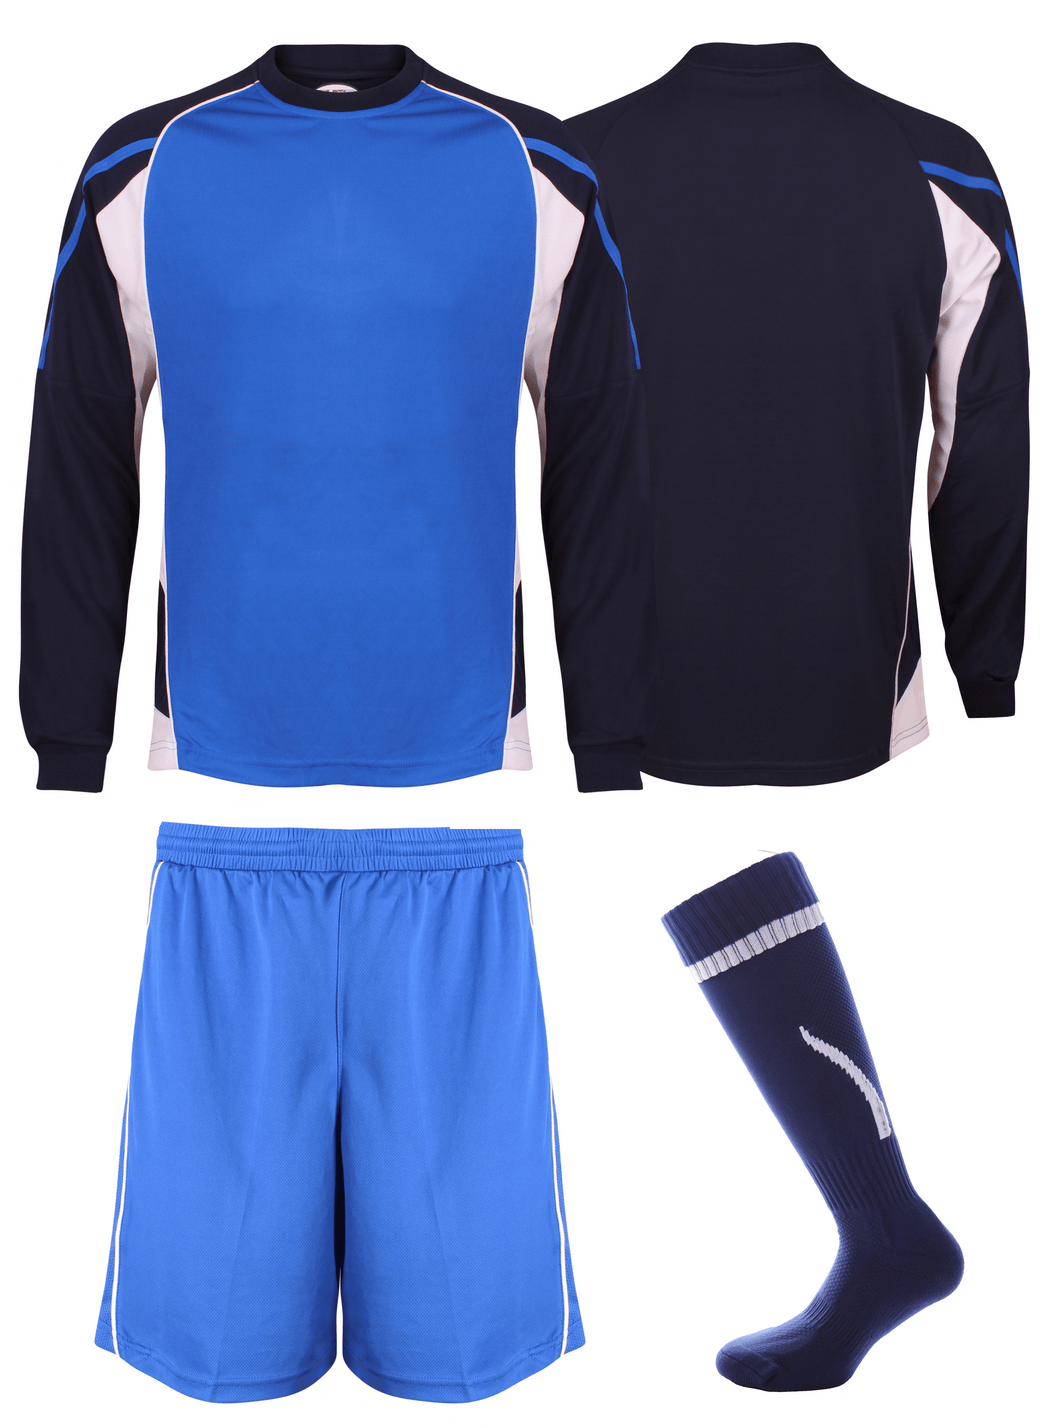 Kids Teamstar Long Sleeve Full Kits Gazelle Sports UK SJ/28 A Royal/Navy/White YES